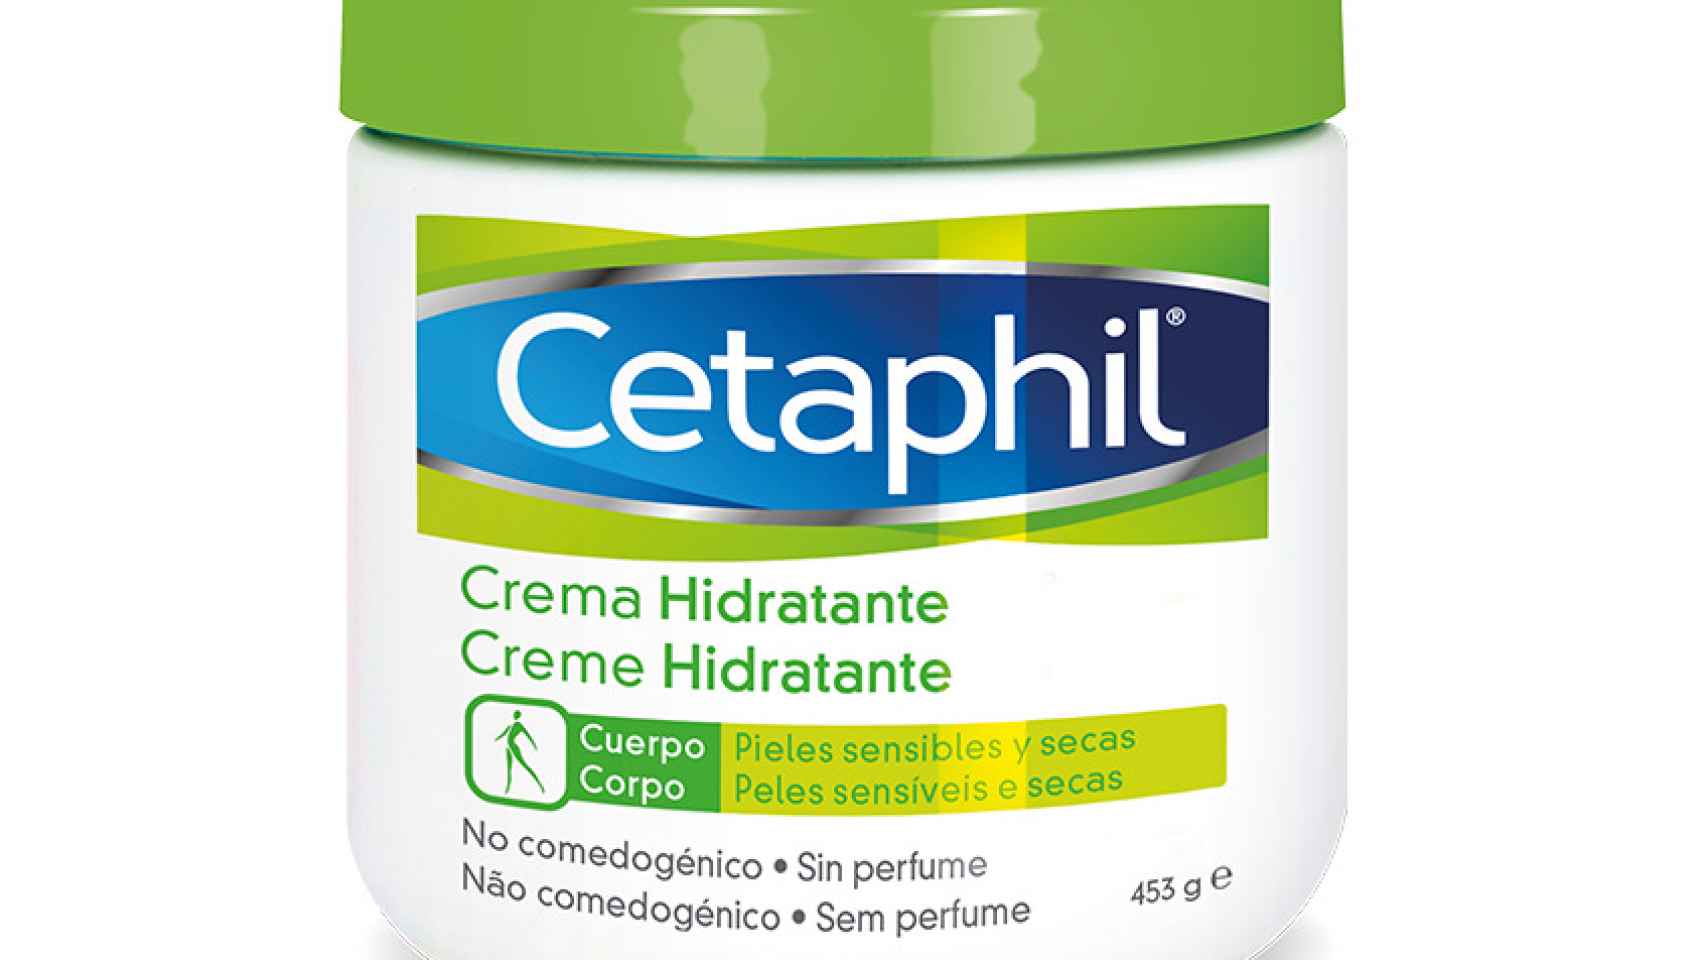 Crema hidratante de Cetaphil.